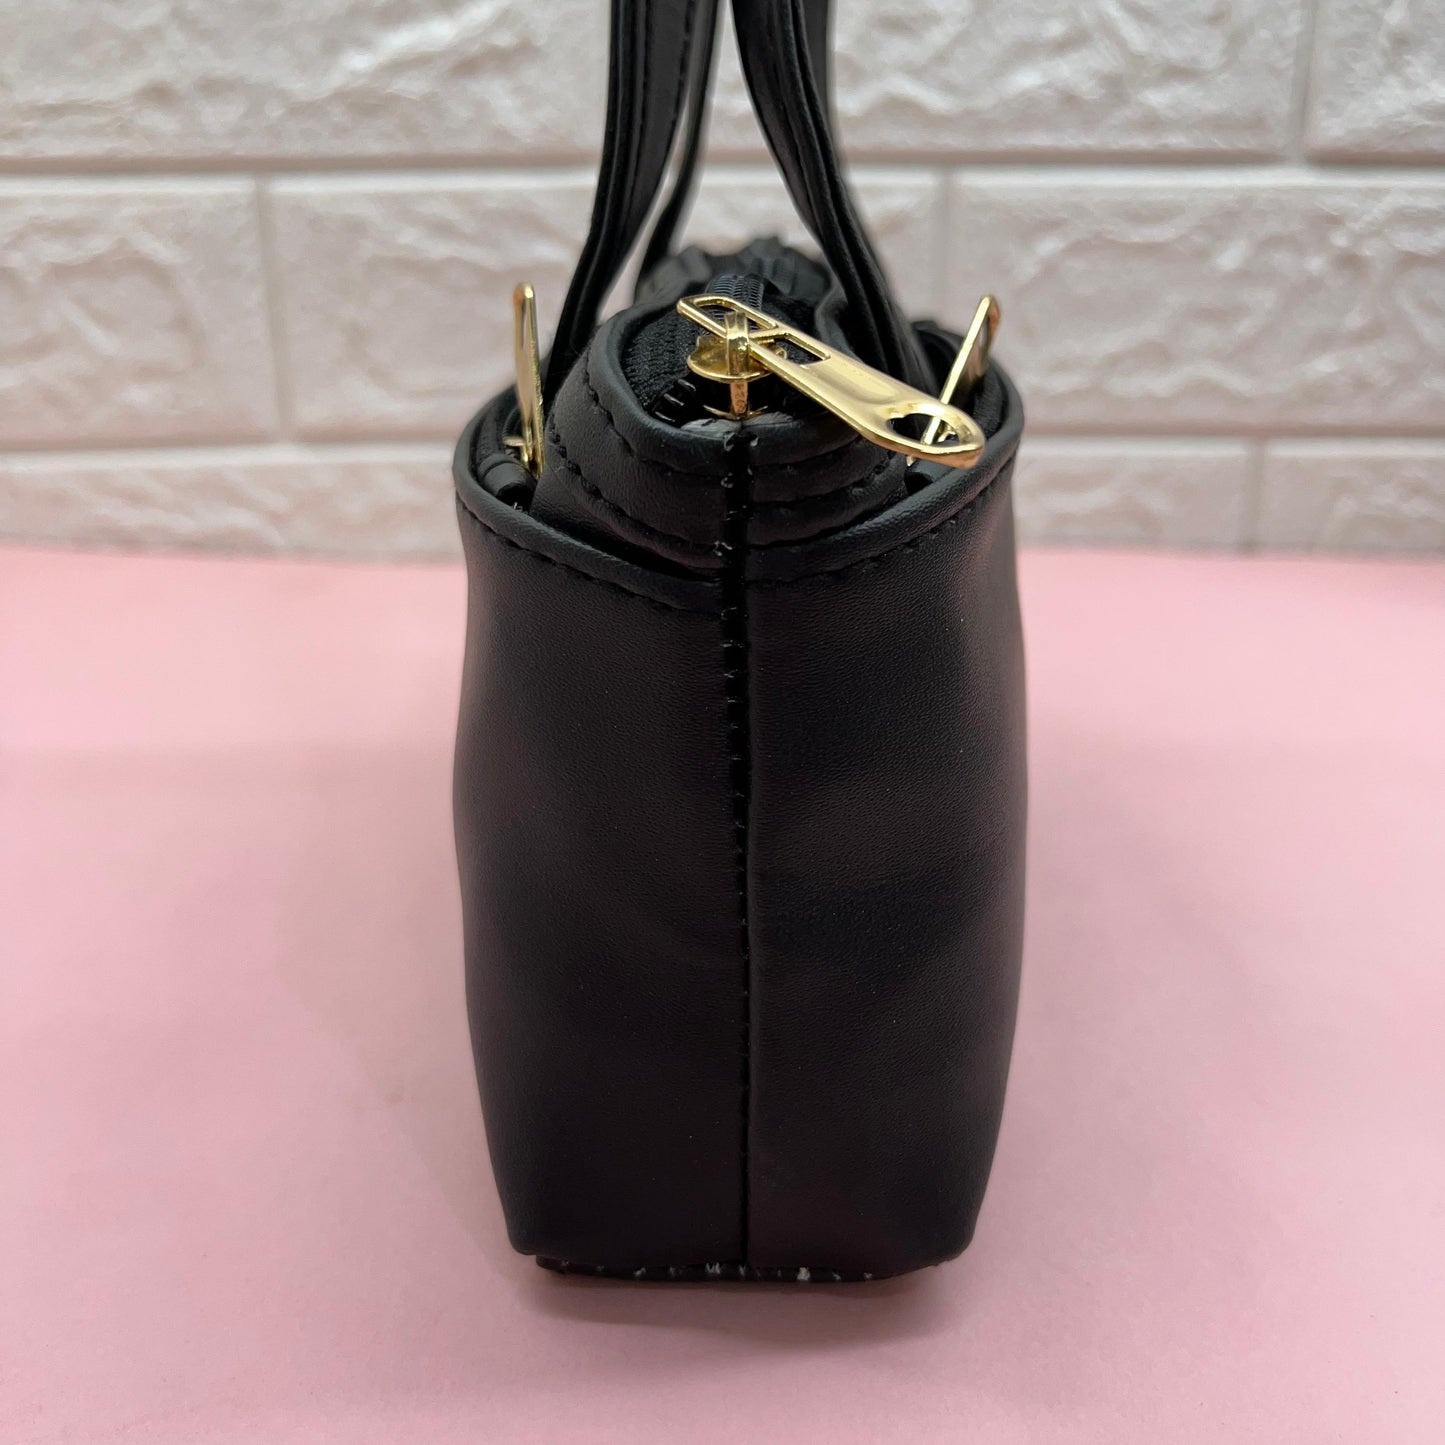 Attractive Women's Small Handbag